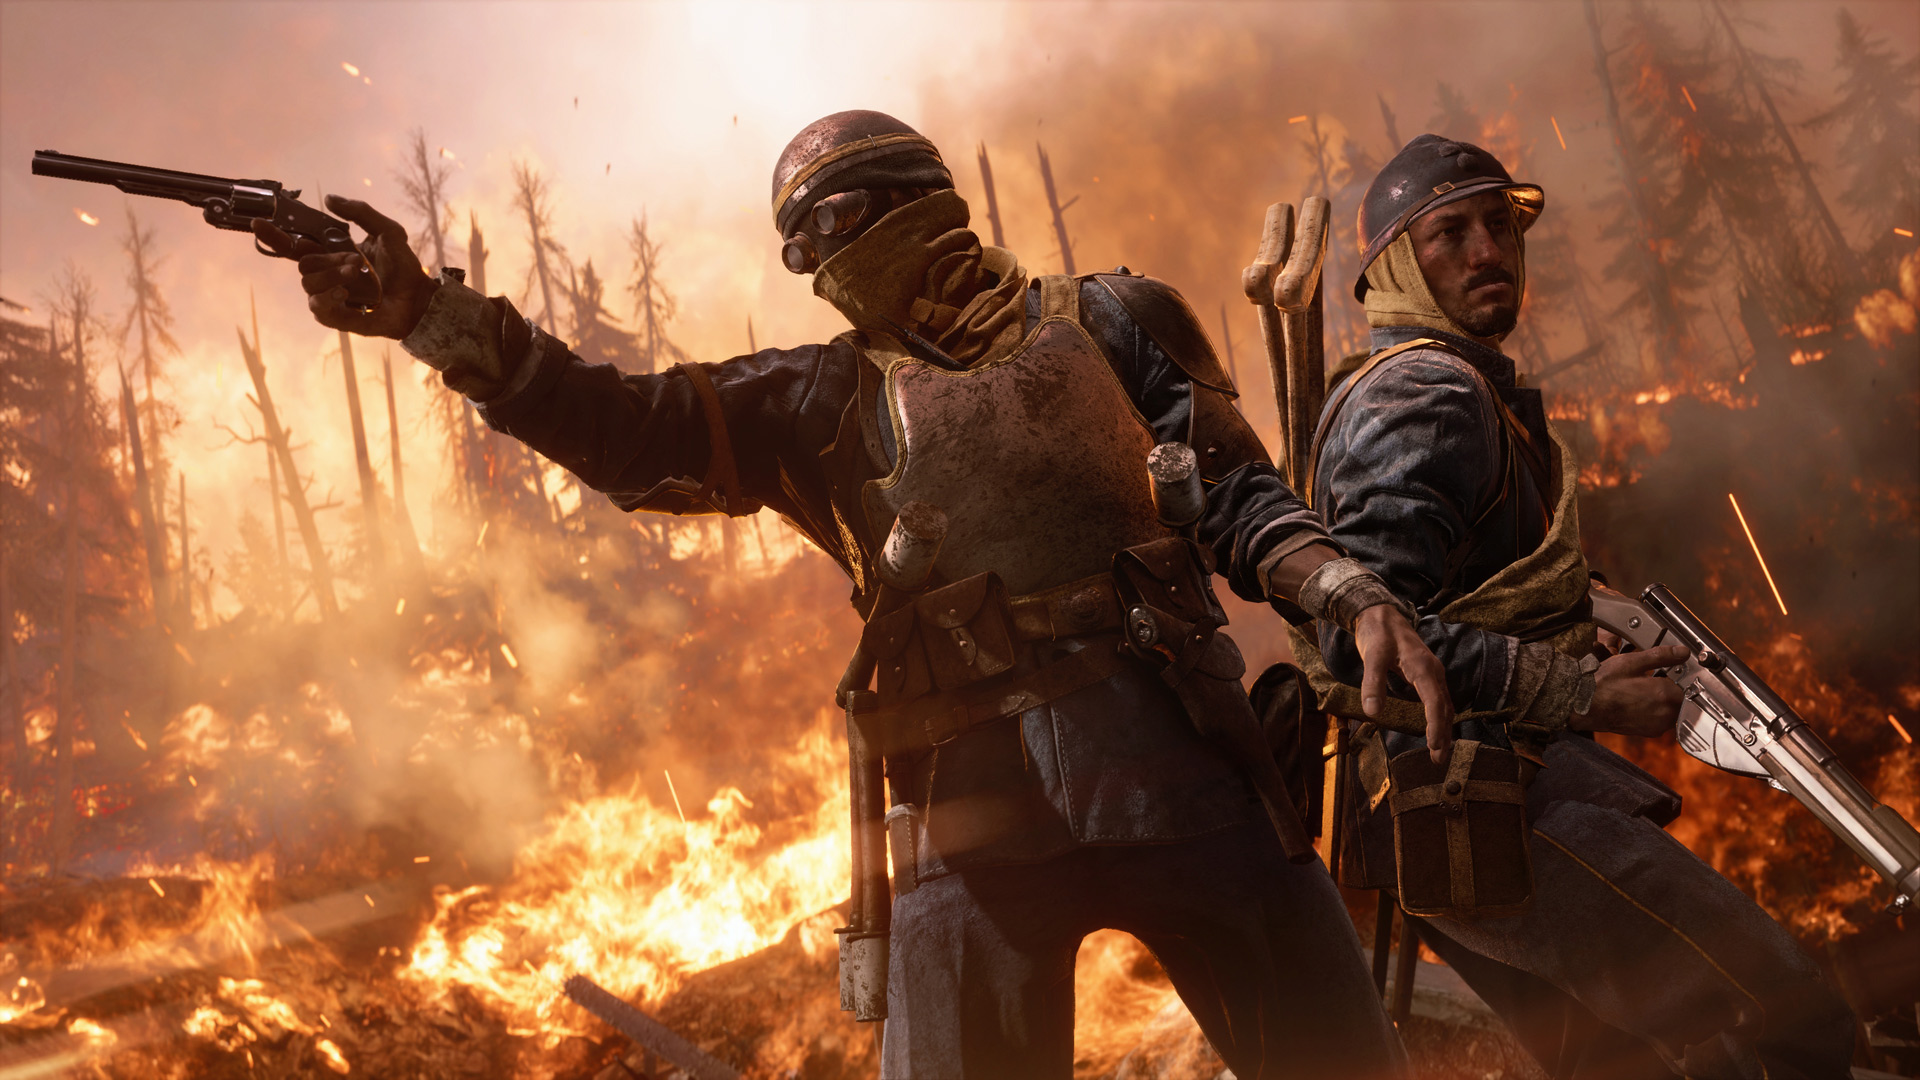 Battlefield V will take gamers back to World War II